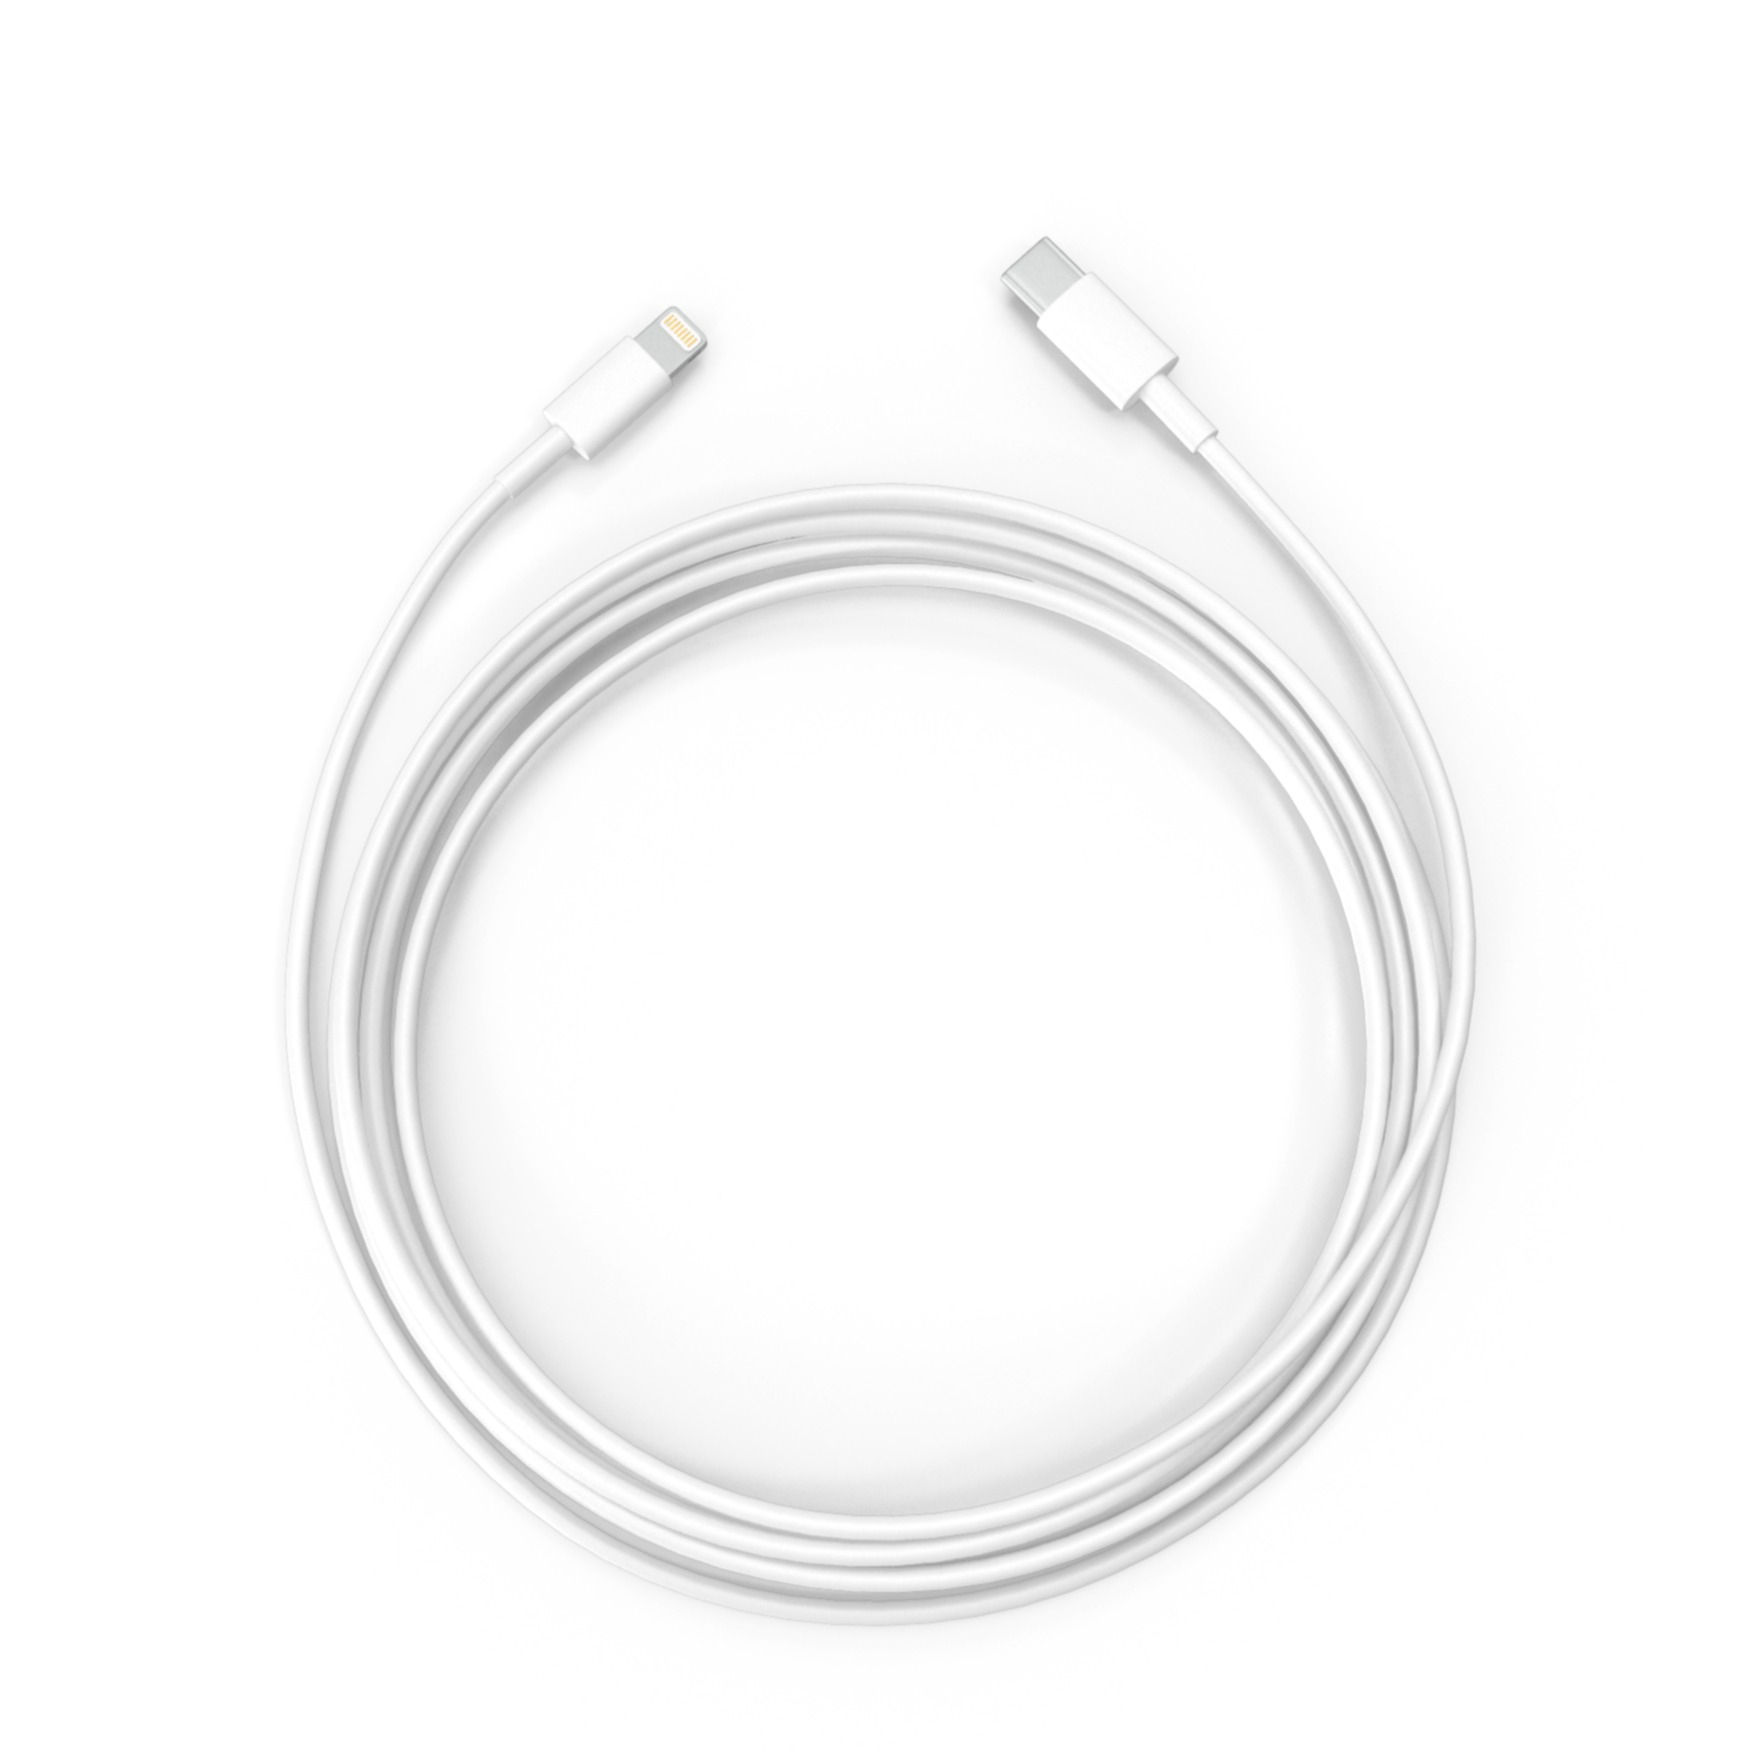 Image of Apple - (1m) iPhone SE (2020) Lightning auf USB C Ladekabel Datenkabel MK0X2ZM/A - Weiss bei Apfelkiste.ch